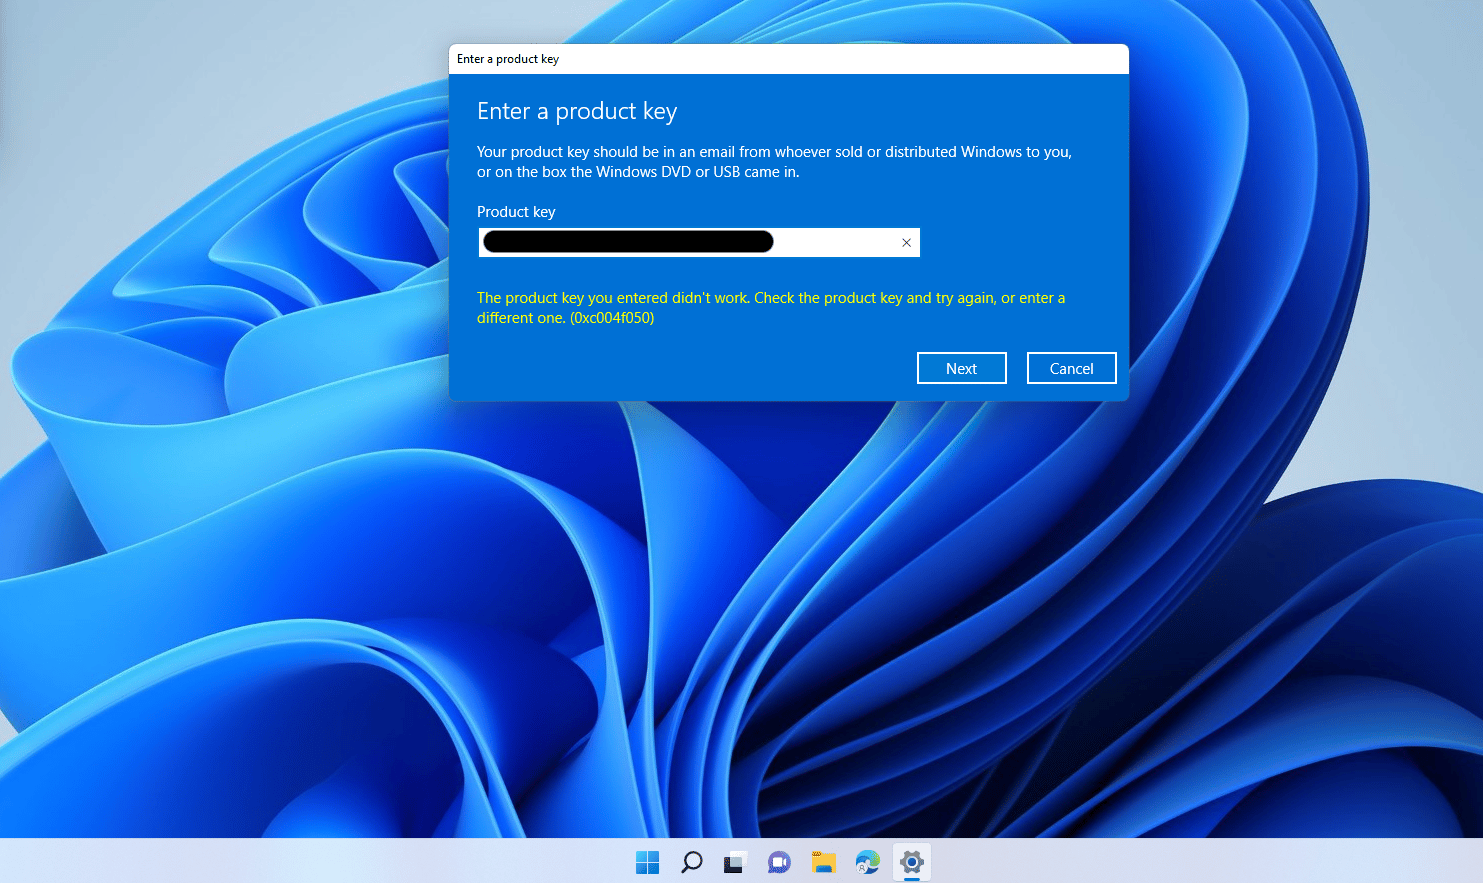 Windows 10 activation error 0xc004f050